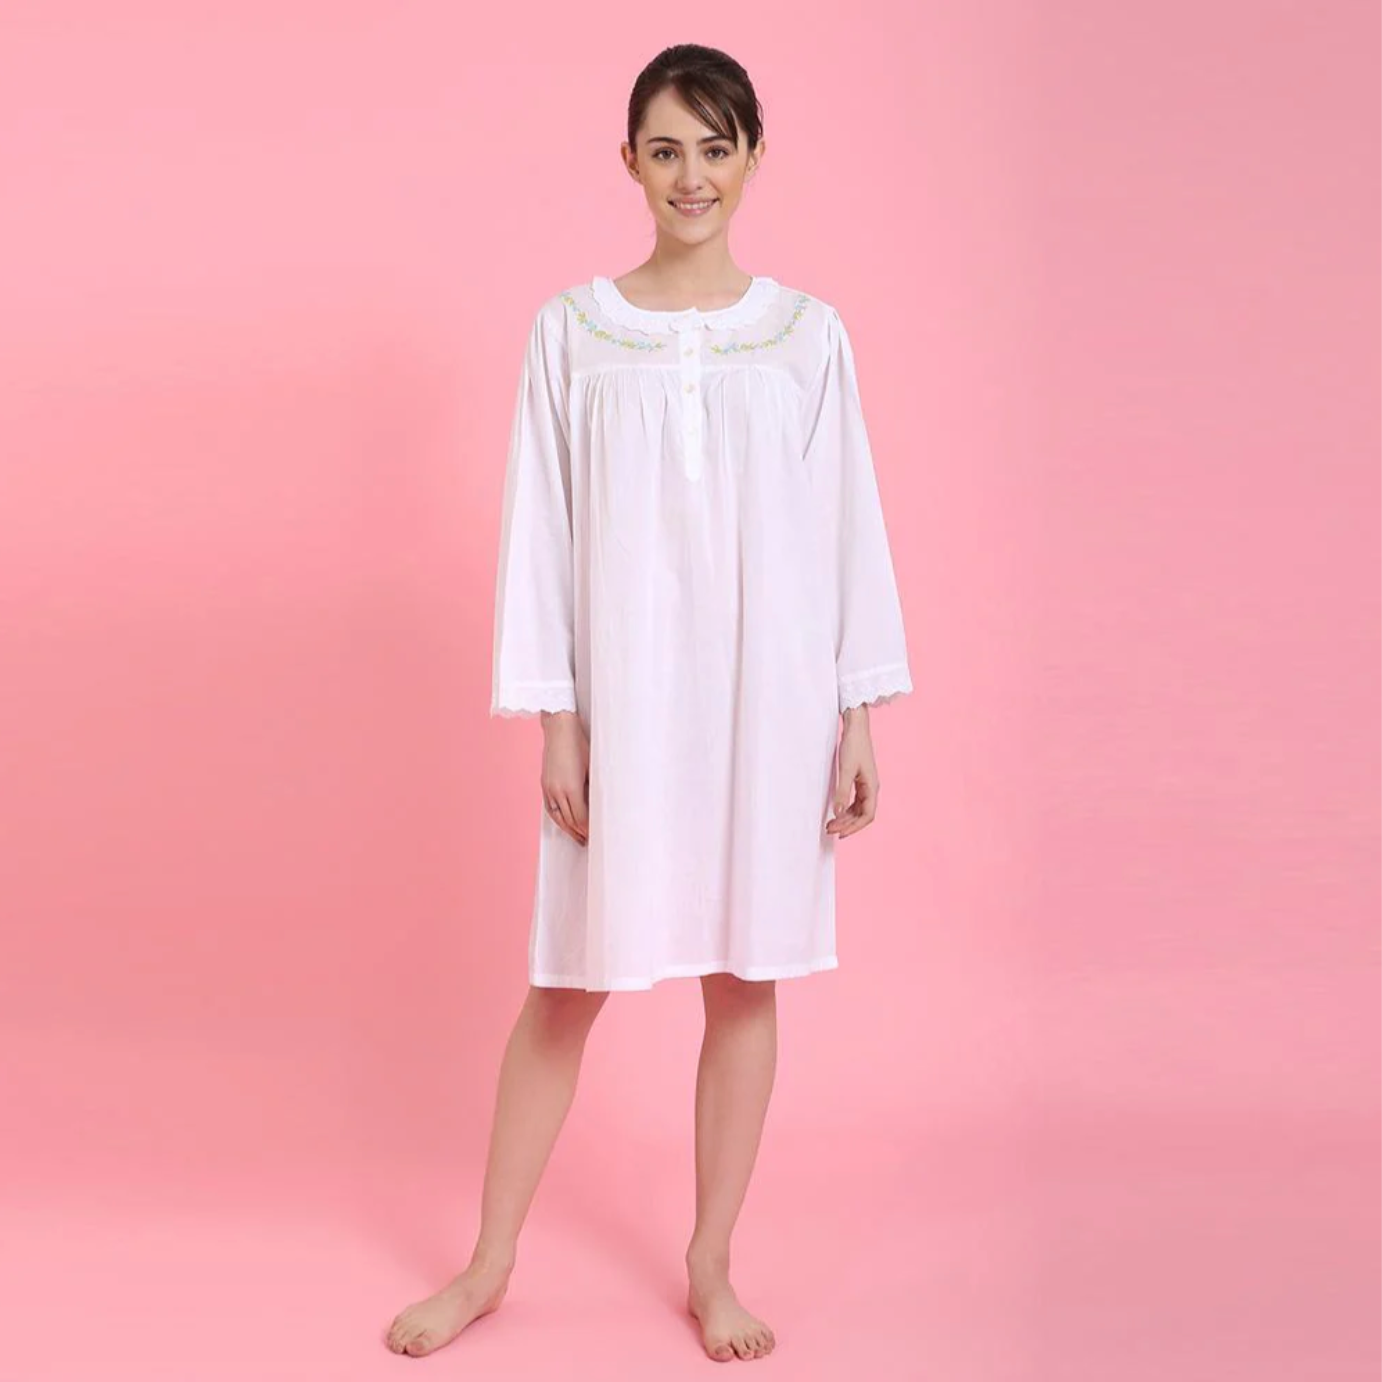 Joanne Long Sleeve 100% Woven Cotton Gown